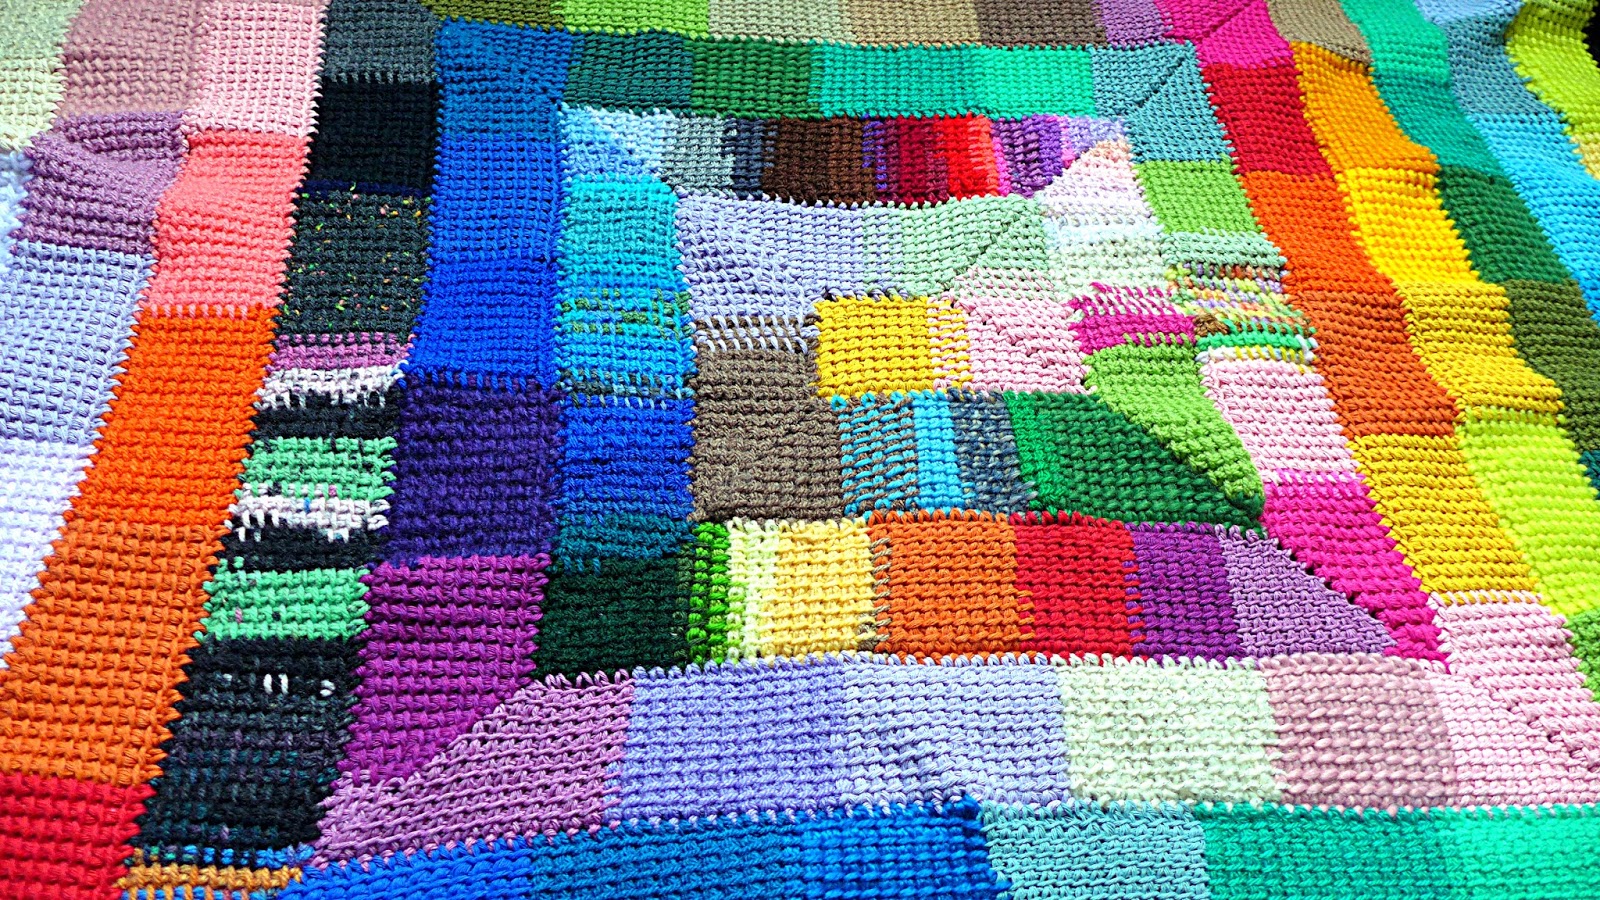 Crochet 10 stitch blanket